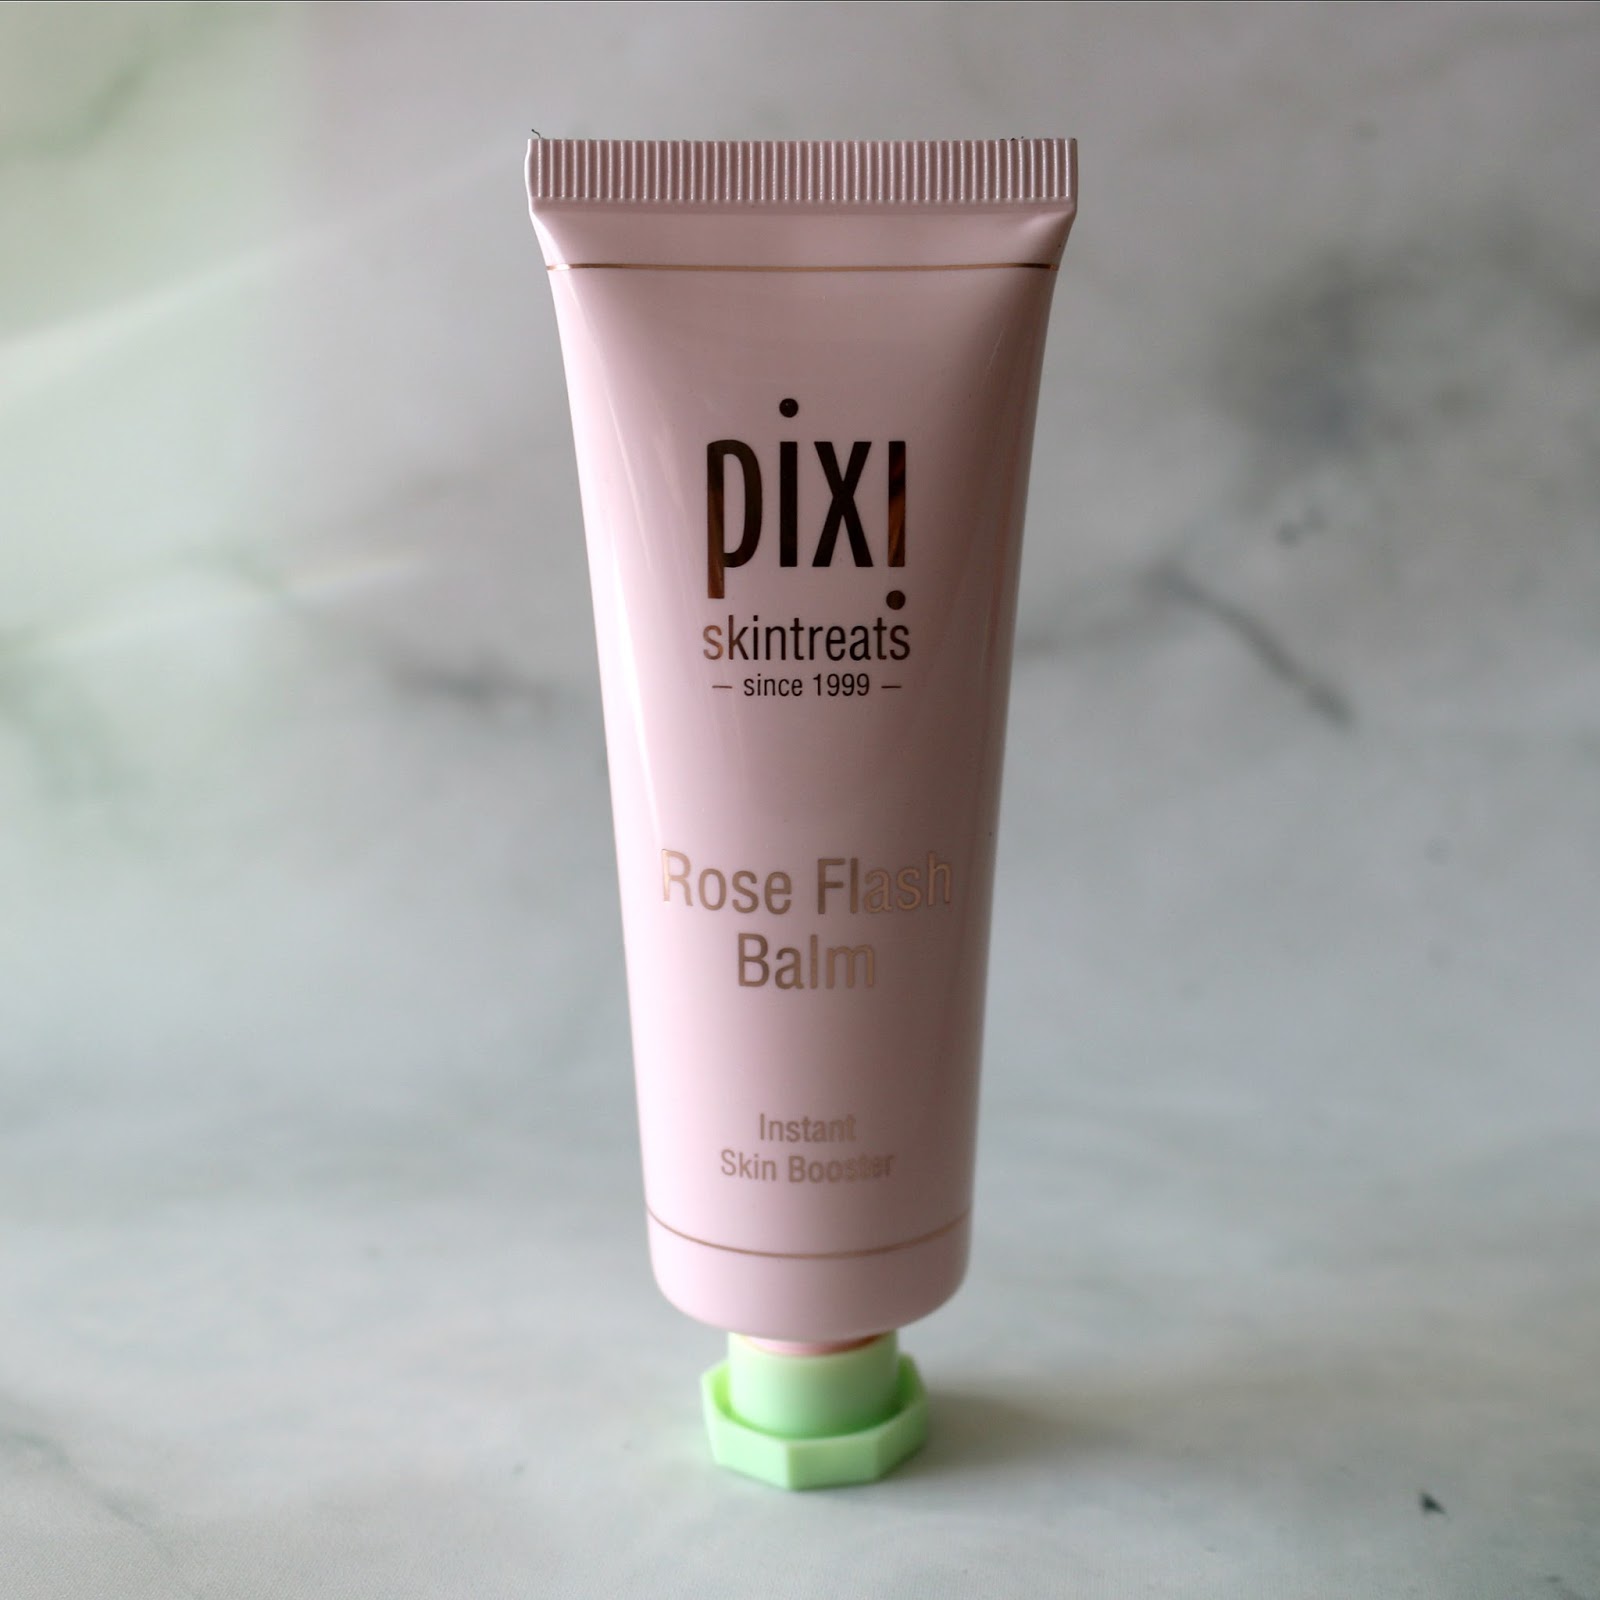 Pixi Beauty Skintreats Rose Flash Balm